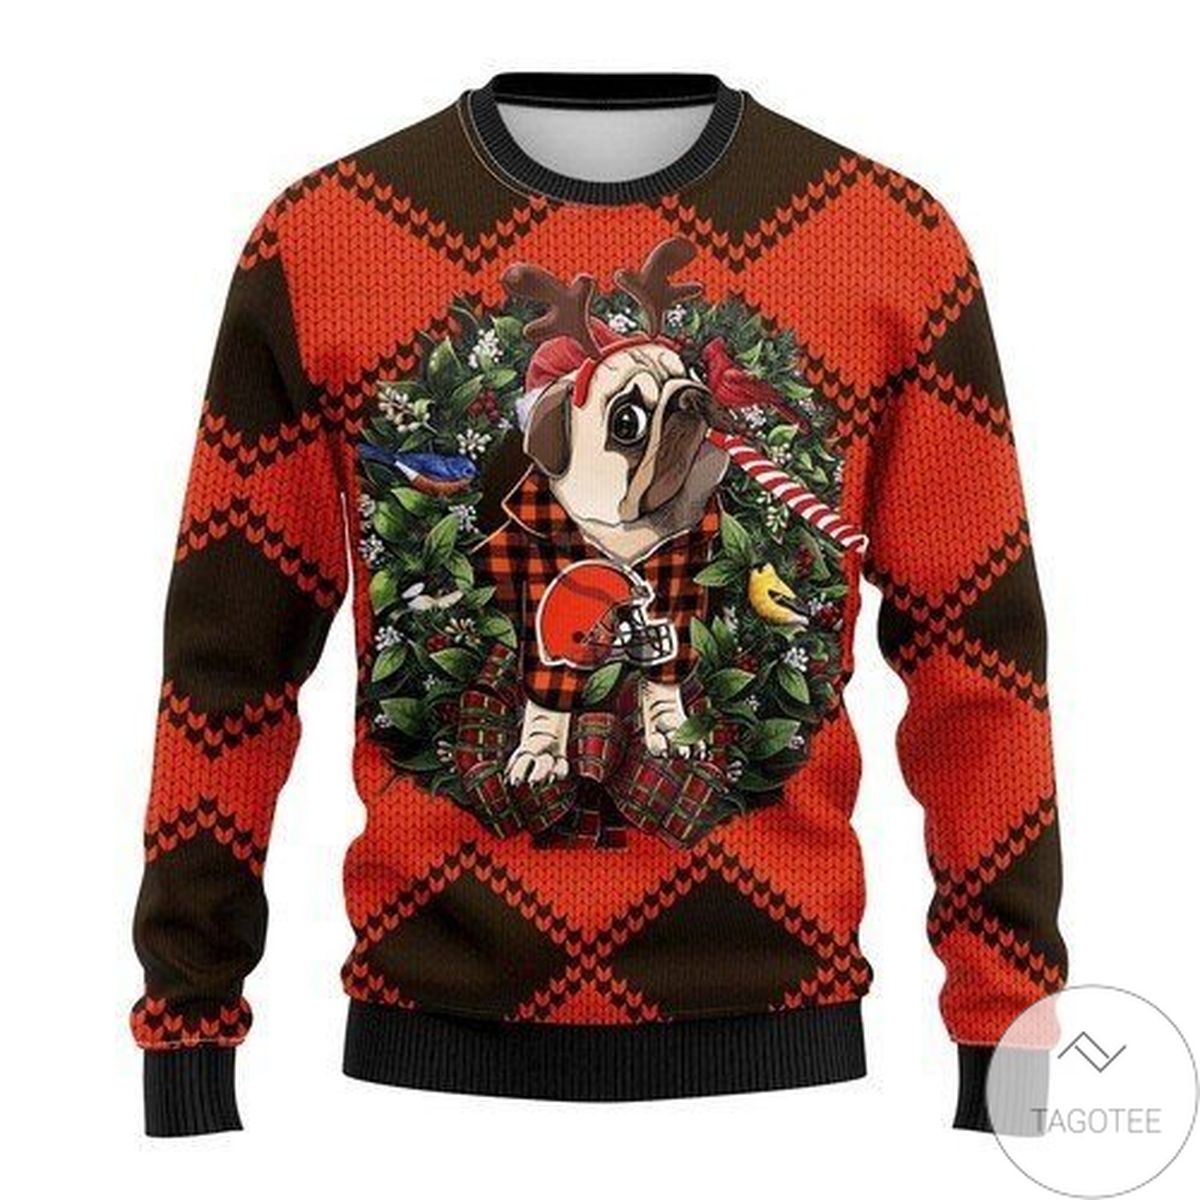 Nfl Cleveland Browns Pug Dog Ugly Christmas Sweater